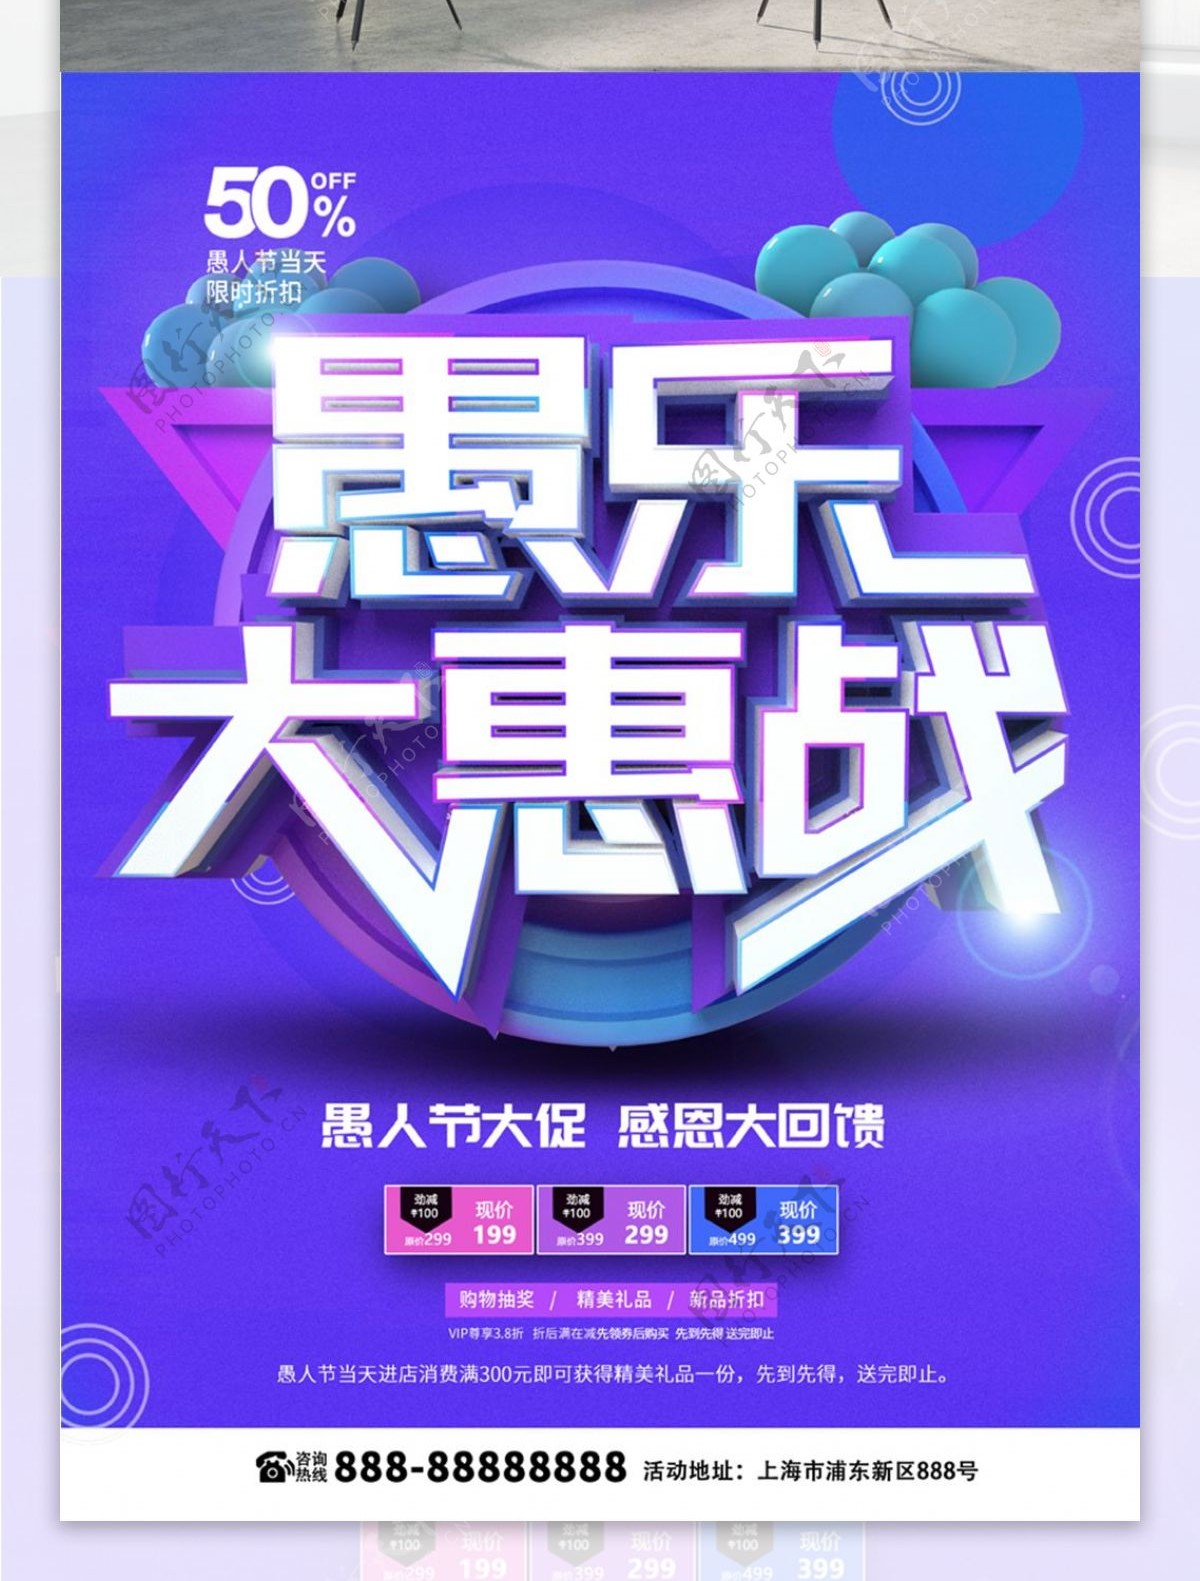 C4D紫蓝色愚乐大惠战愚人节促销海报